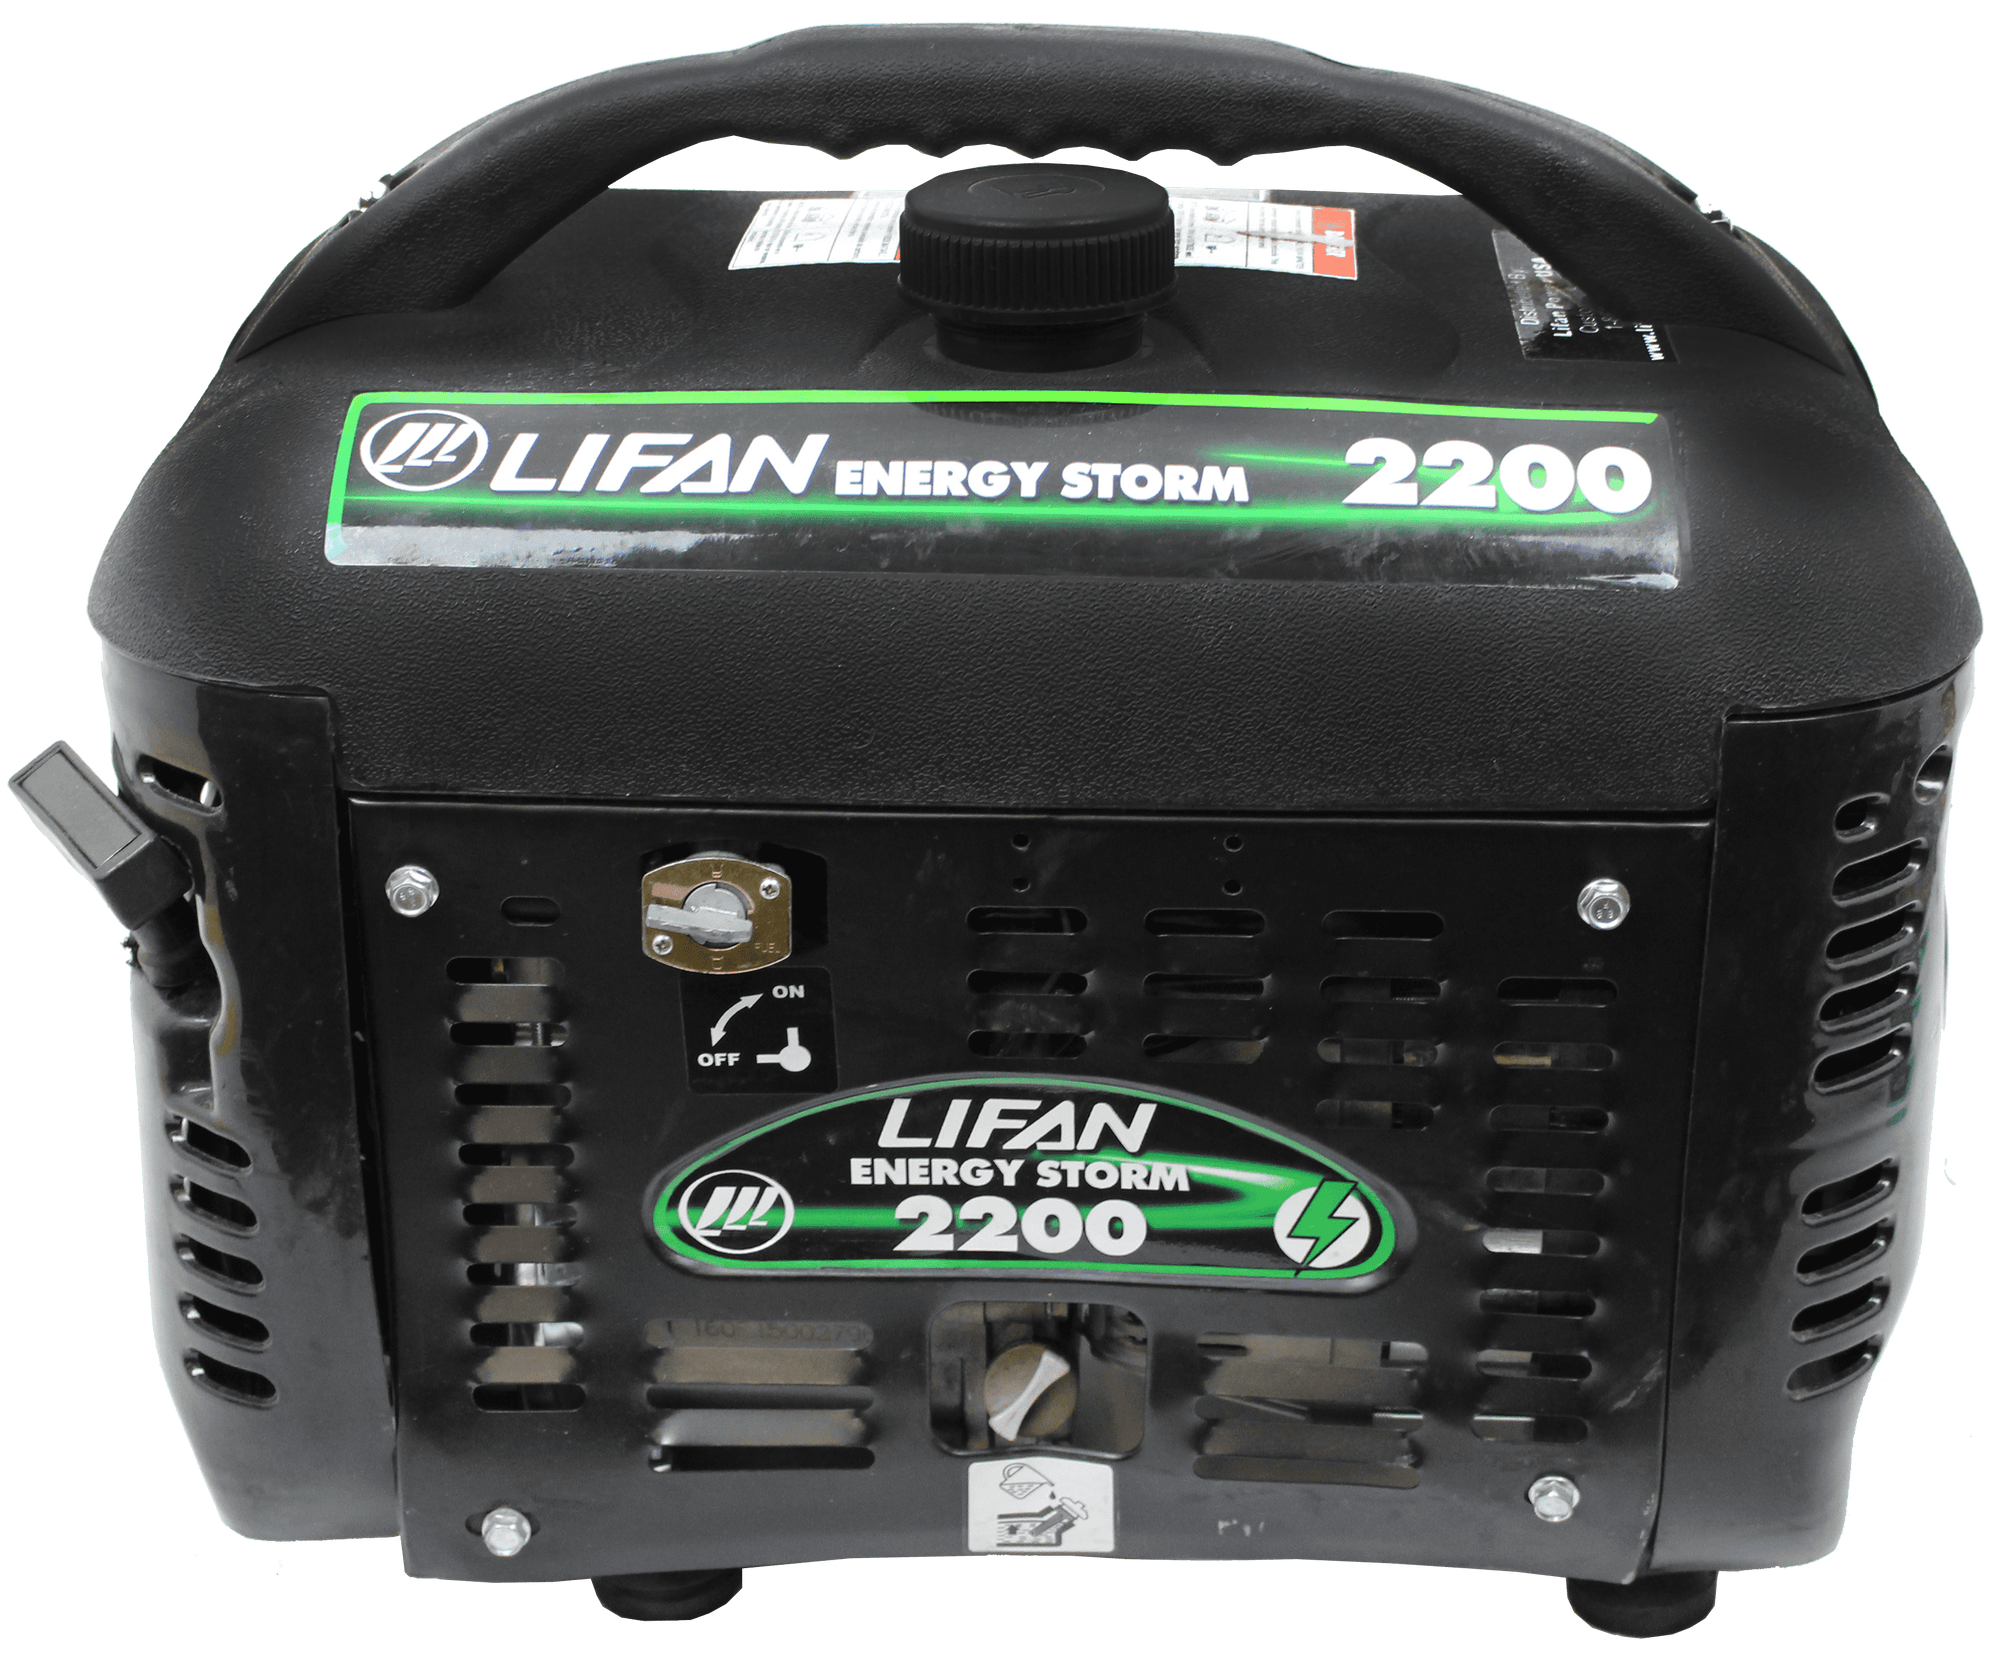 Lifan ES2200SC-CA Energy Storm 1800W/2200W Inverter Generator New